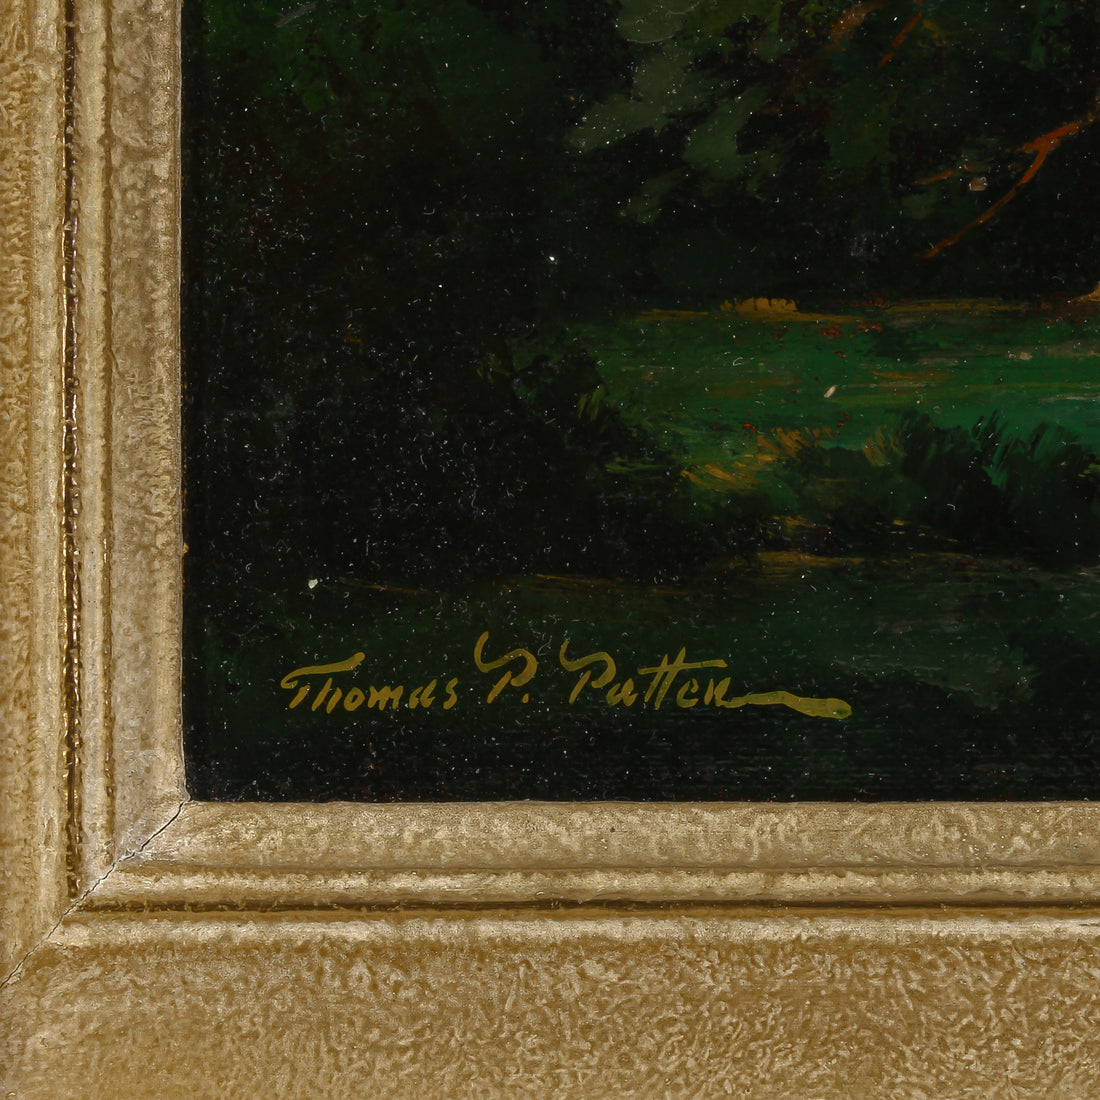 Thomas P. Patten - "Mountain Lake" - Oil on Canvas Board